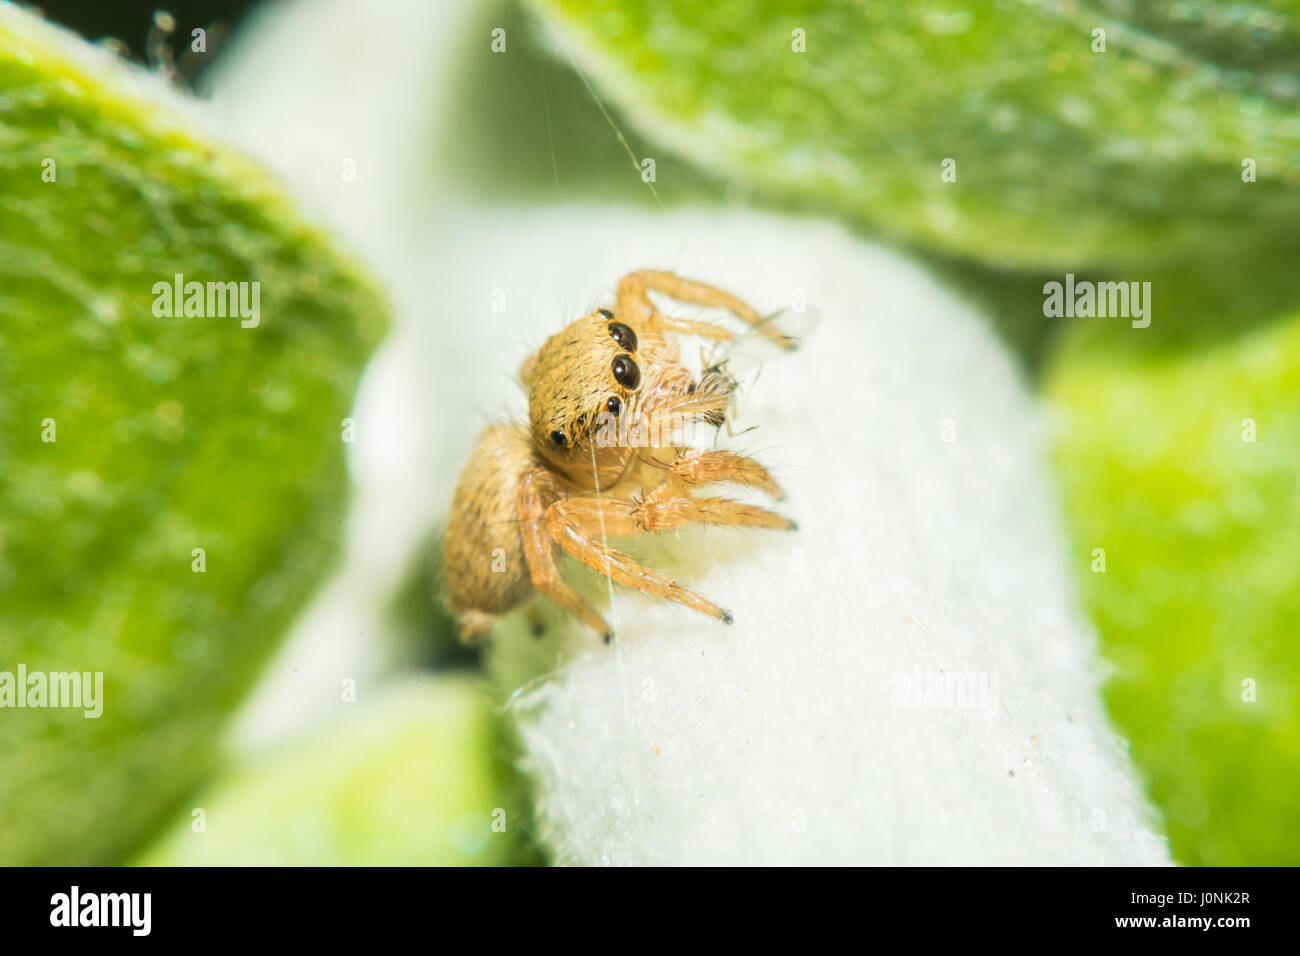 Salticidae jumping spider, Saltines scenics,Hyllus macro view soft focus in nature Stock Photo